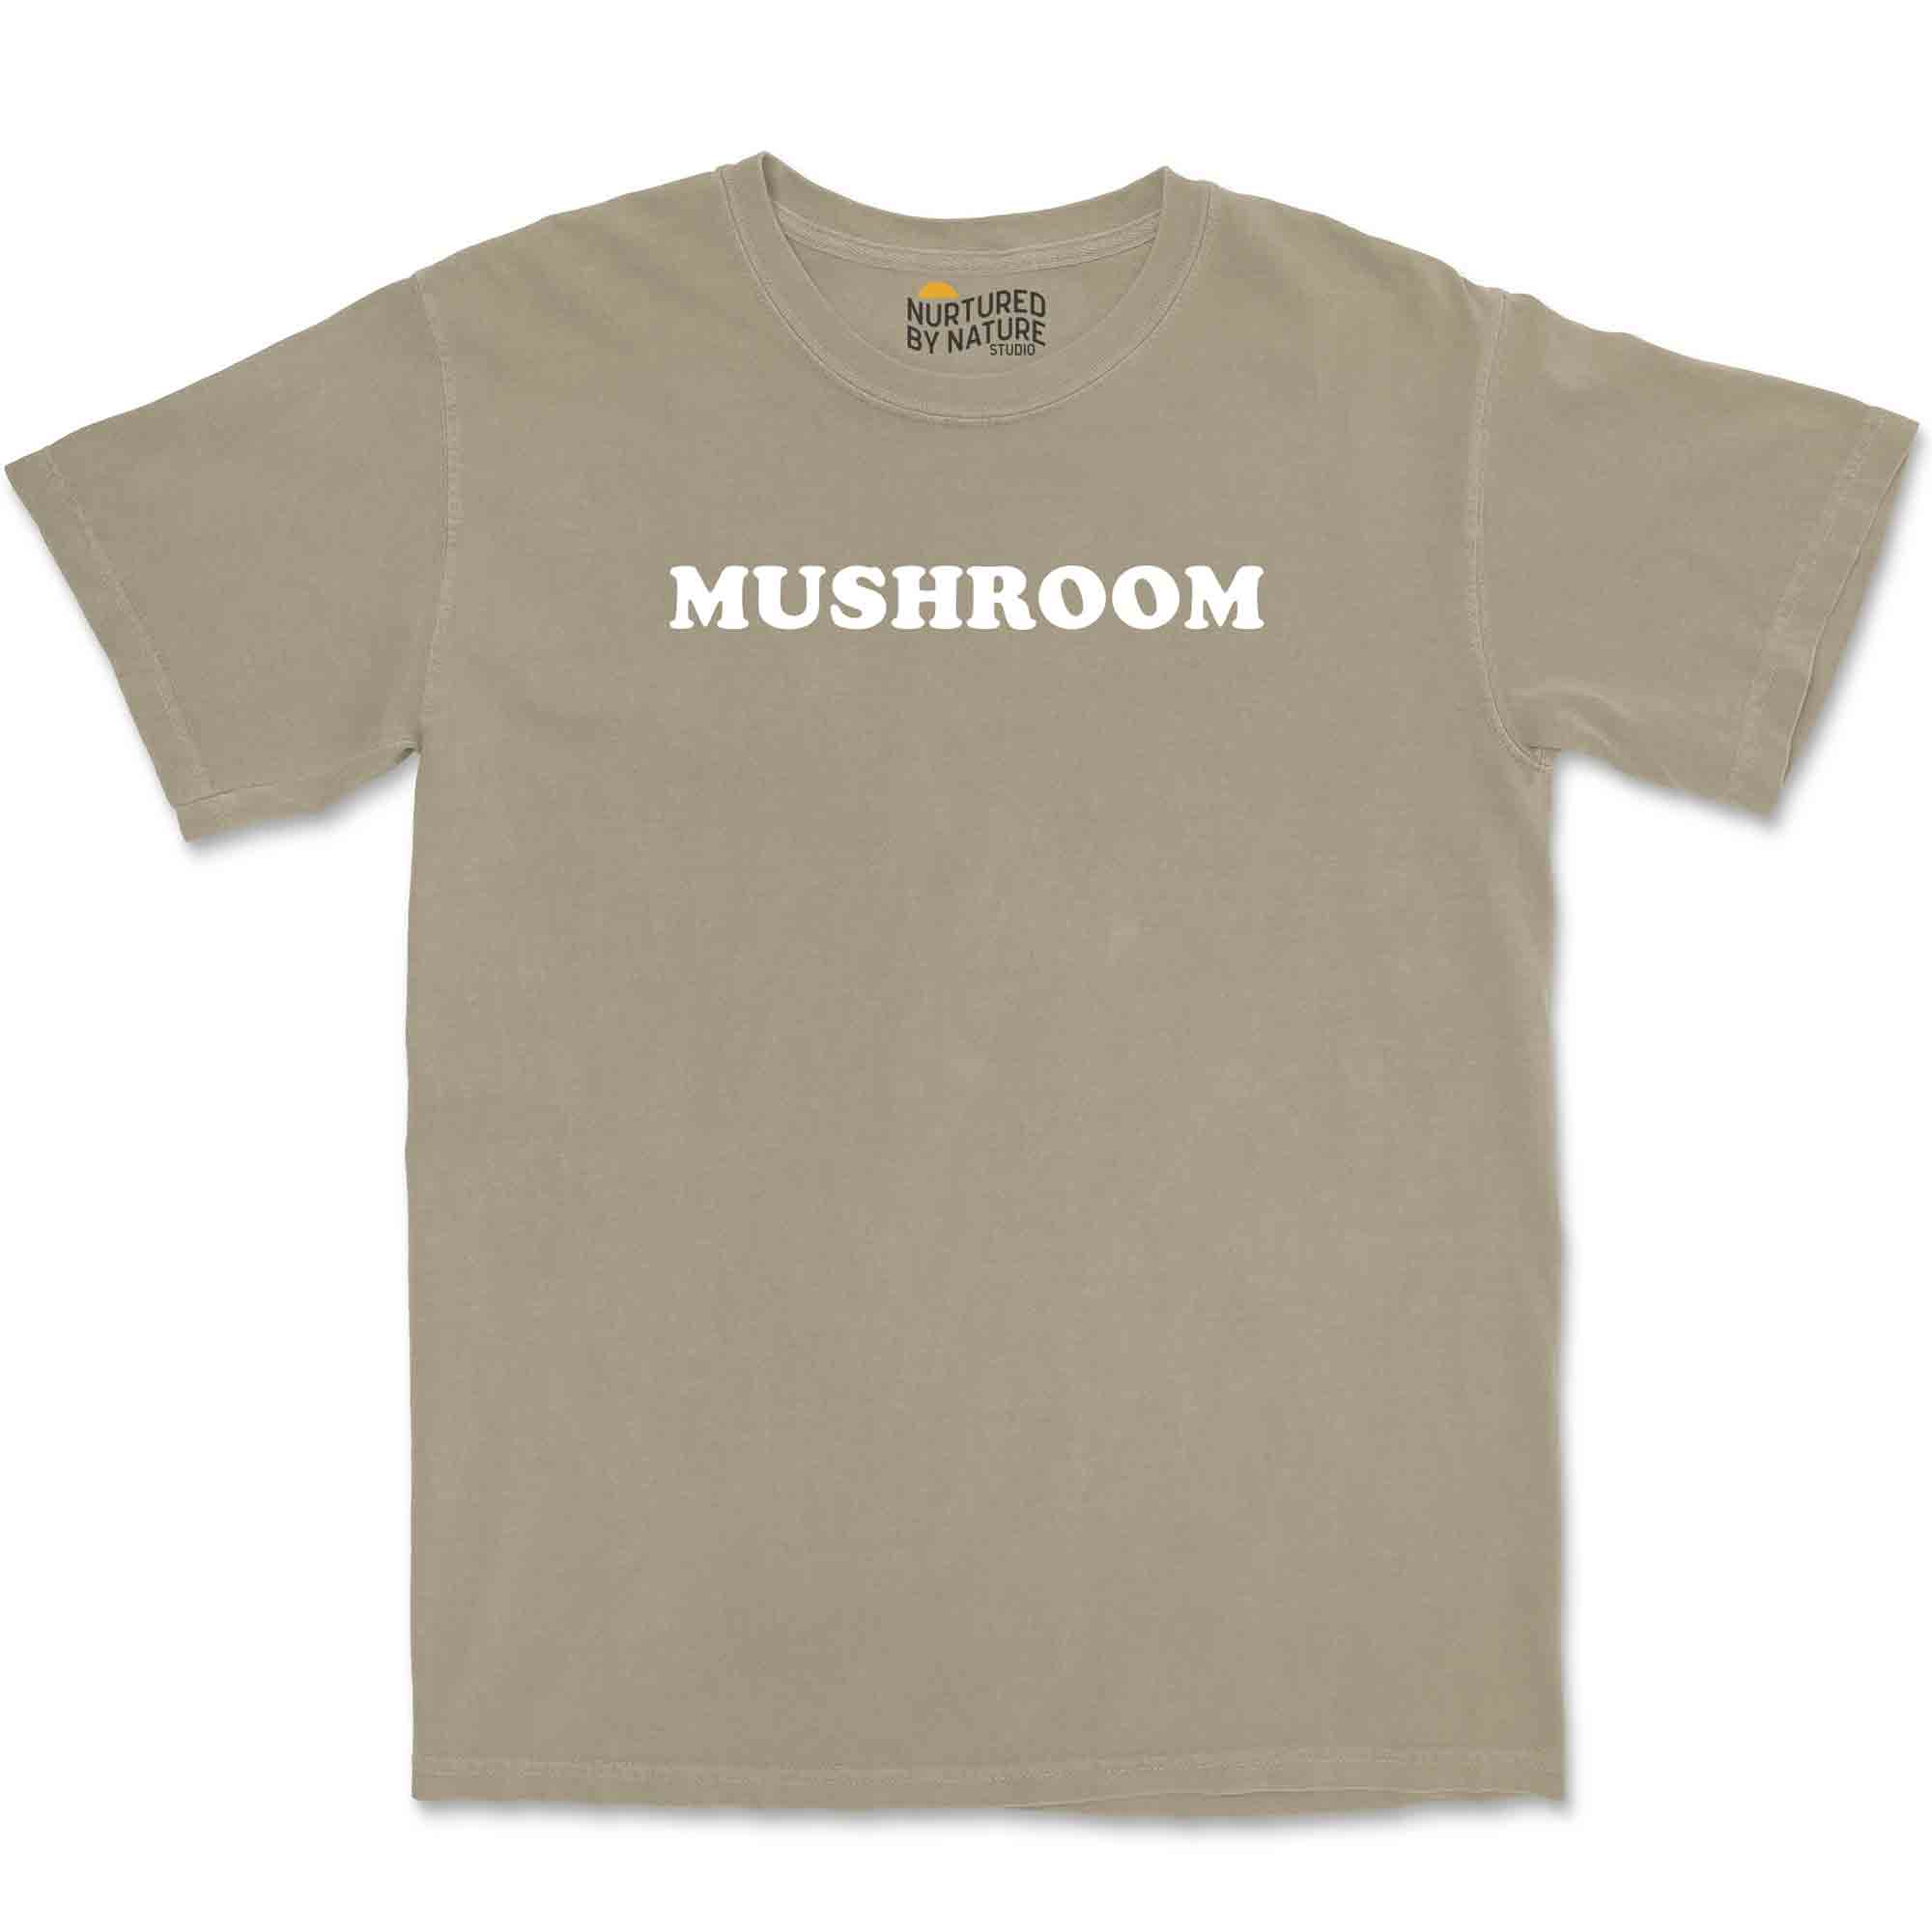 Create Your Own Custom T-Shirt